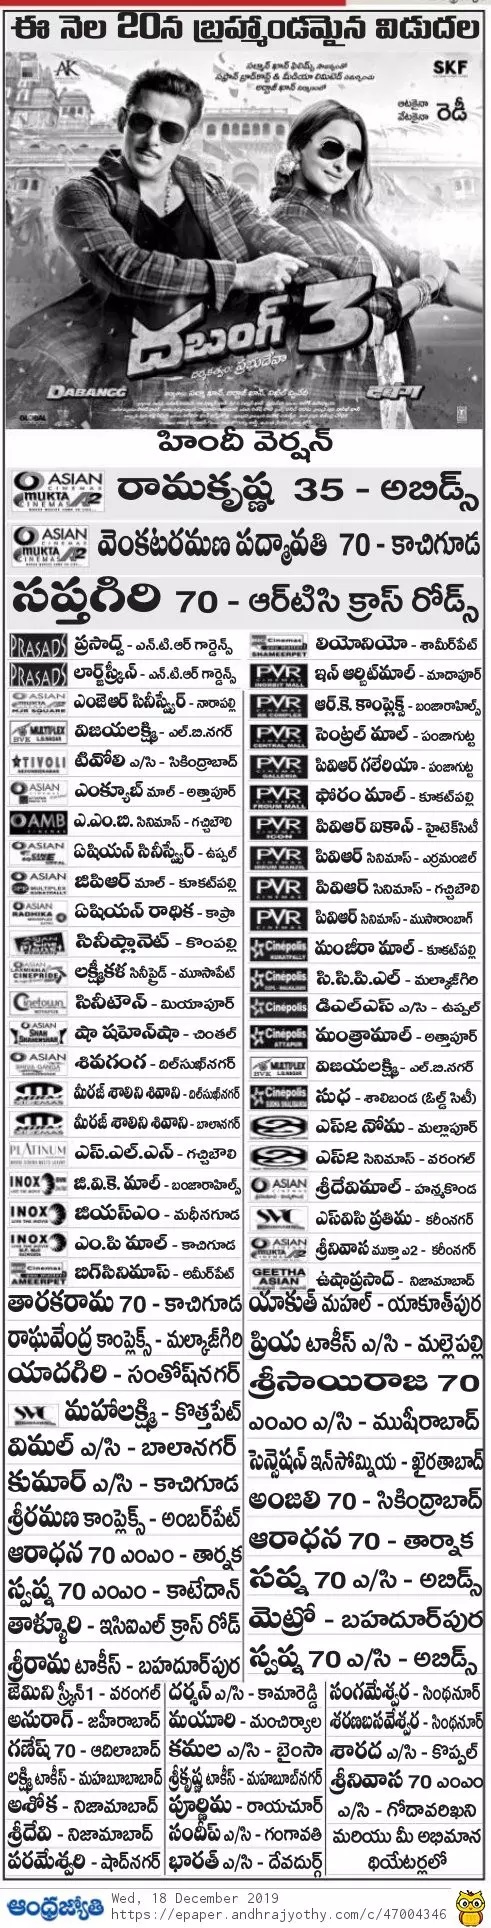 Salman Khan’s Dabangg 3 Hyderabad Theaters List